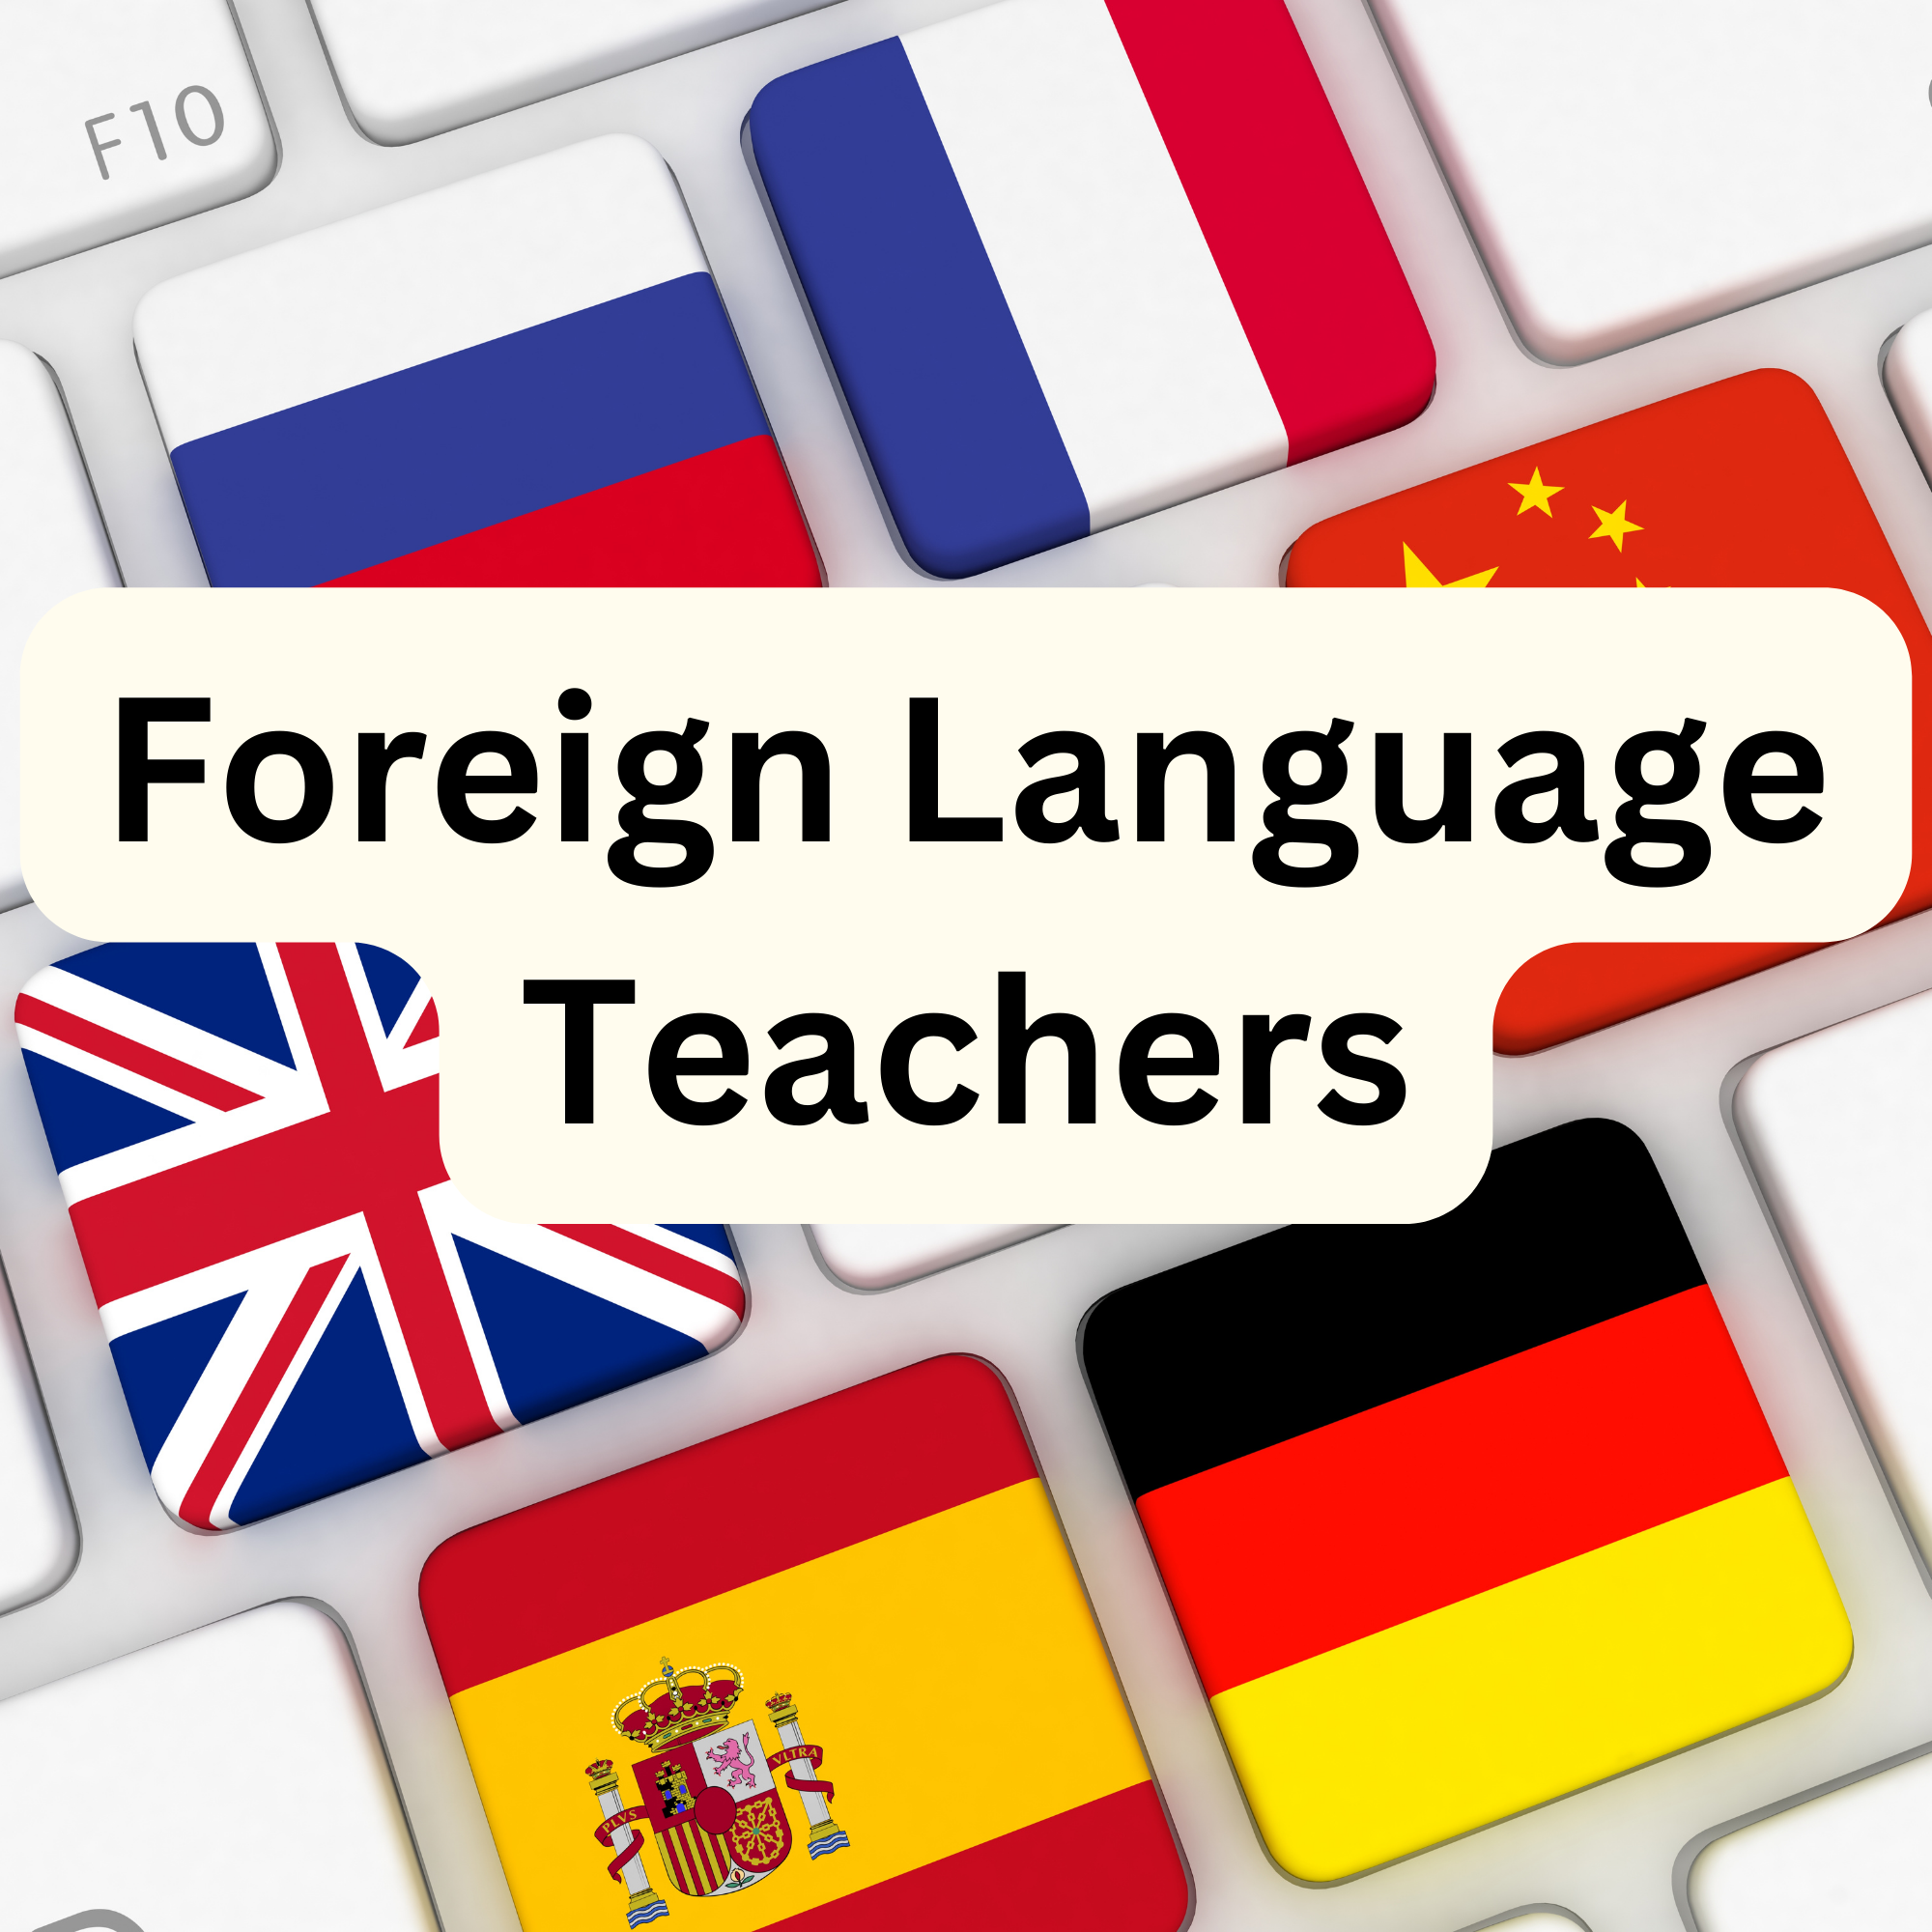 Foreign Language Teachers